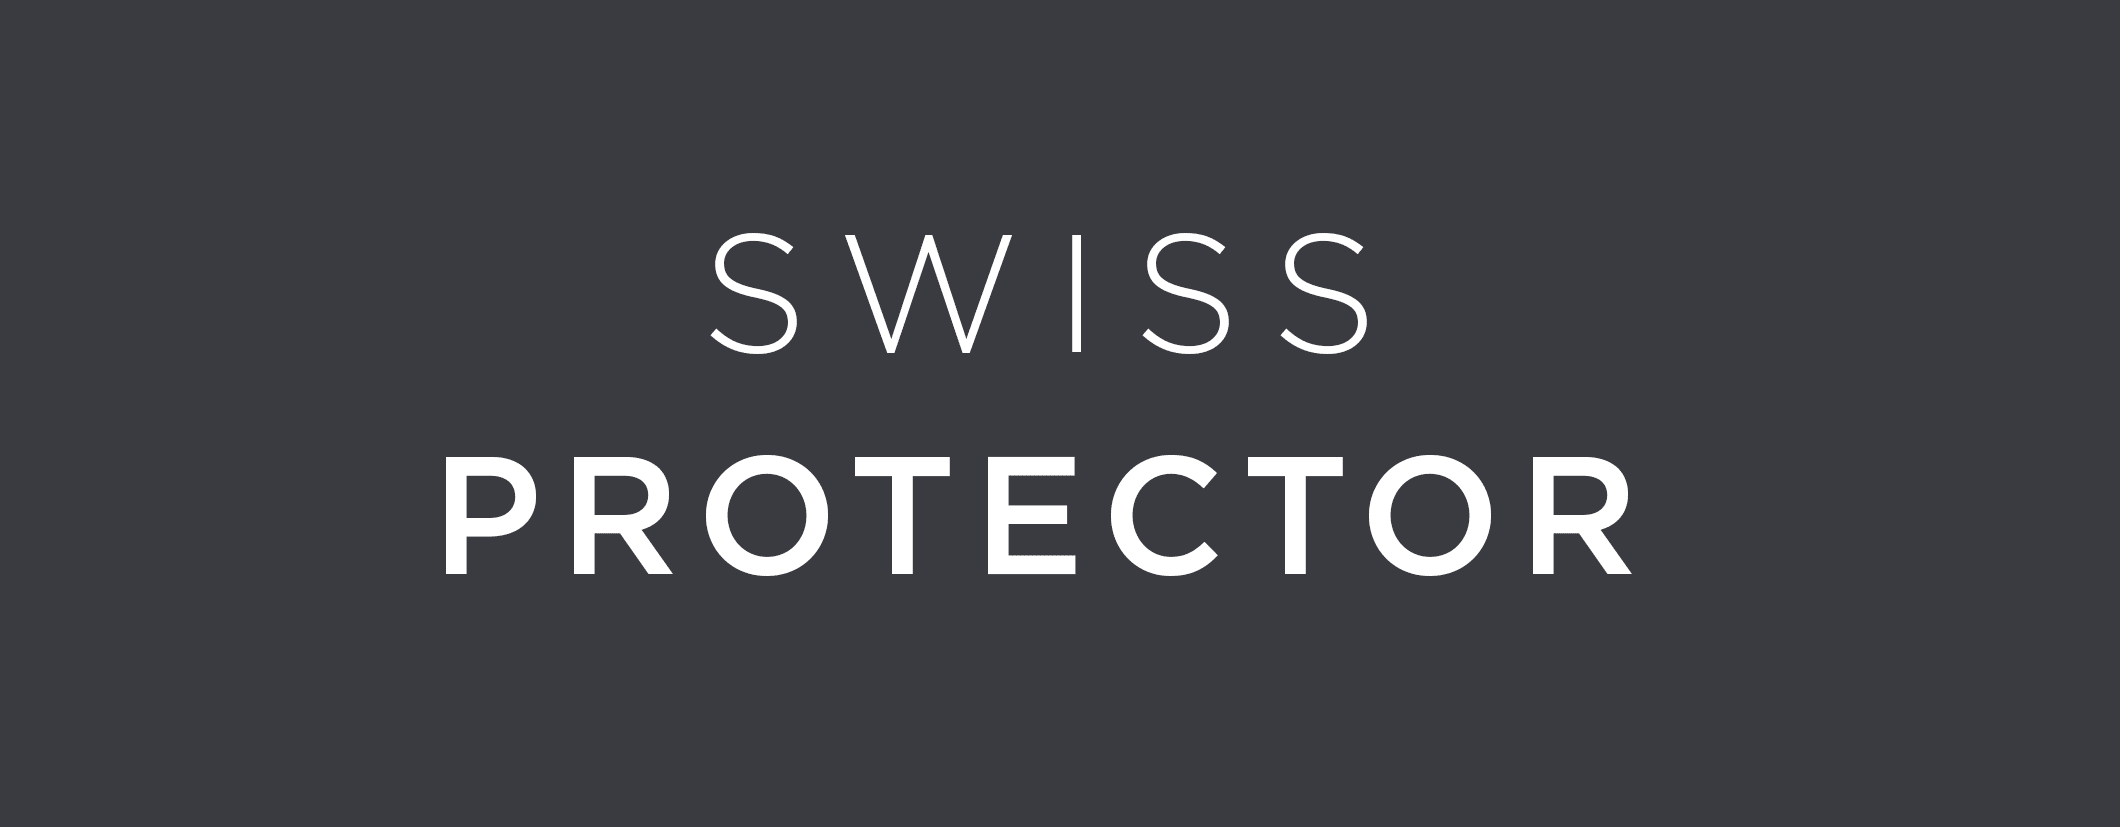 logo Swiss Protector background grey